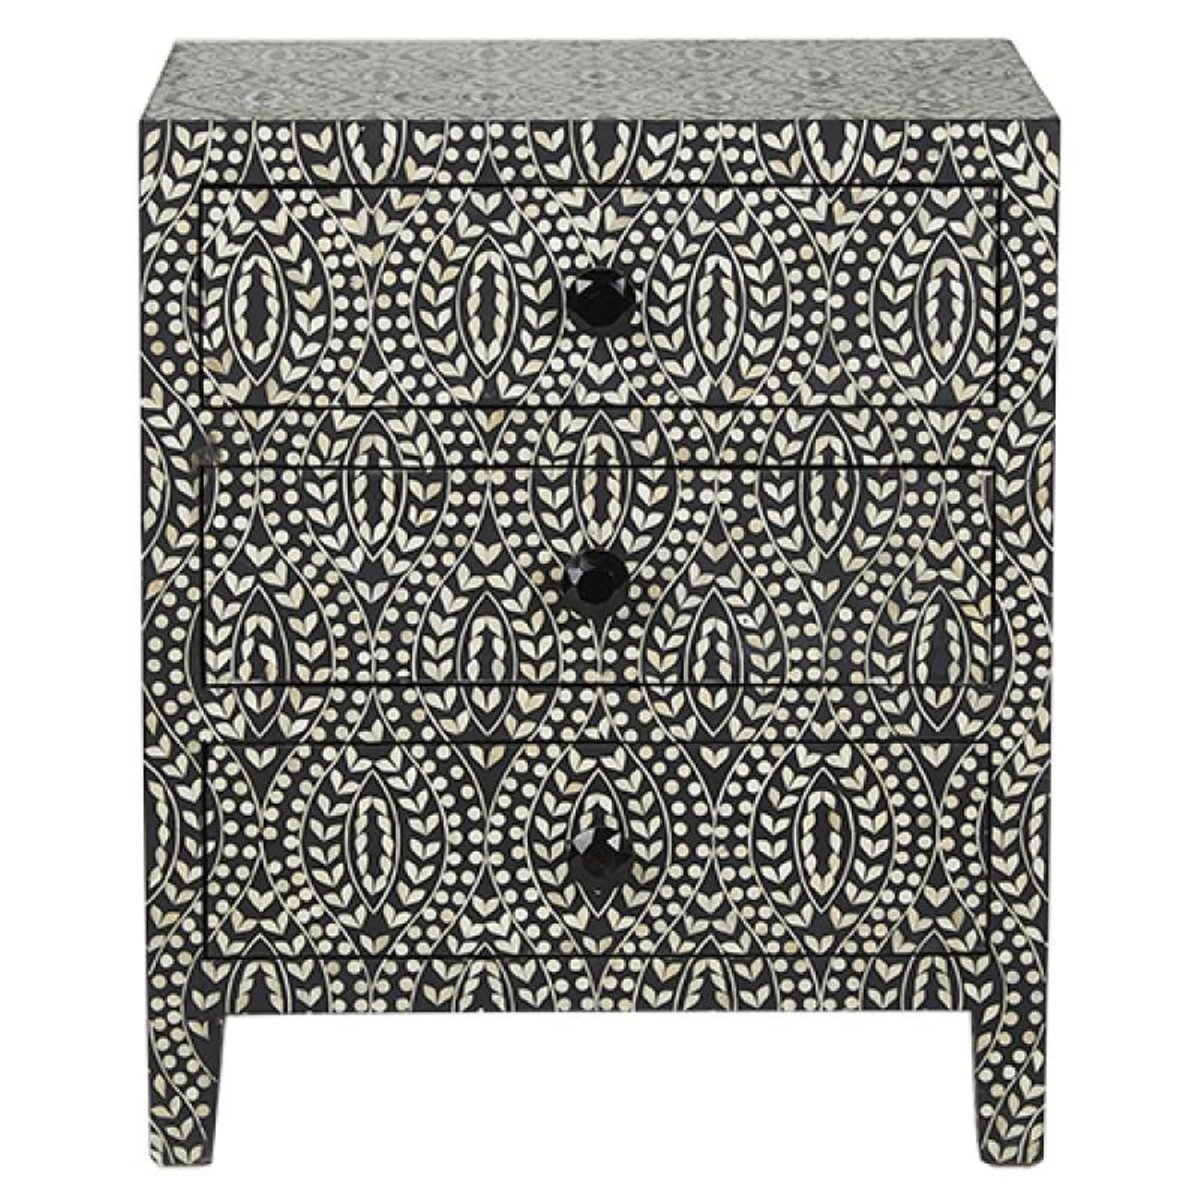 Bone Inlay 3 Drawers Motif Design Bedside Table in Black Color